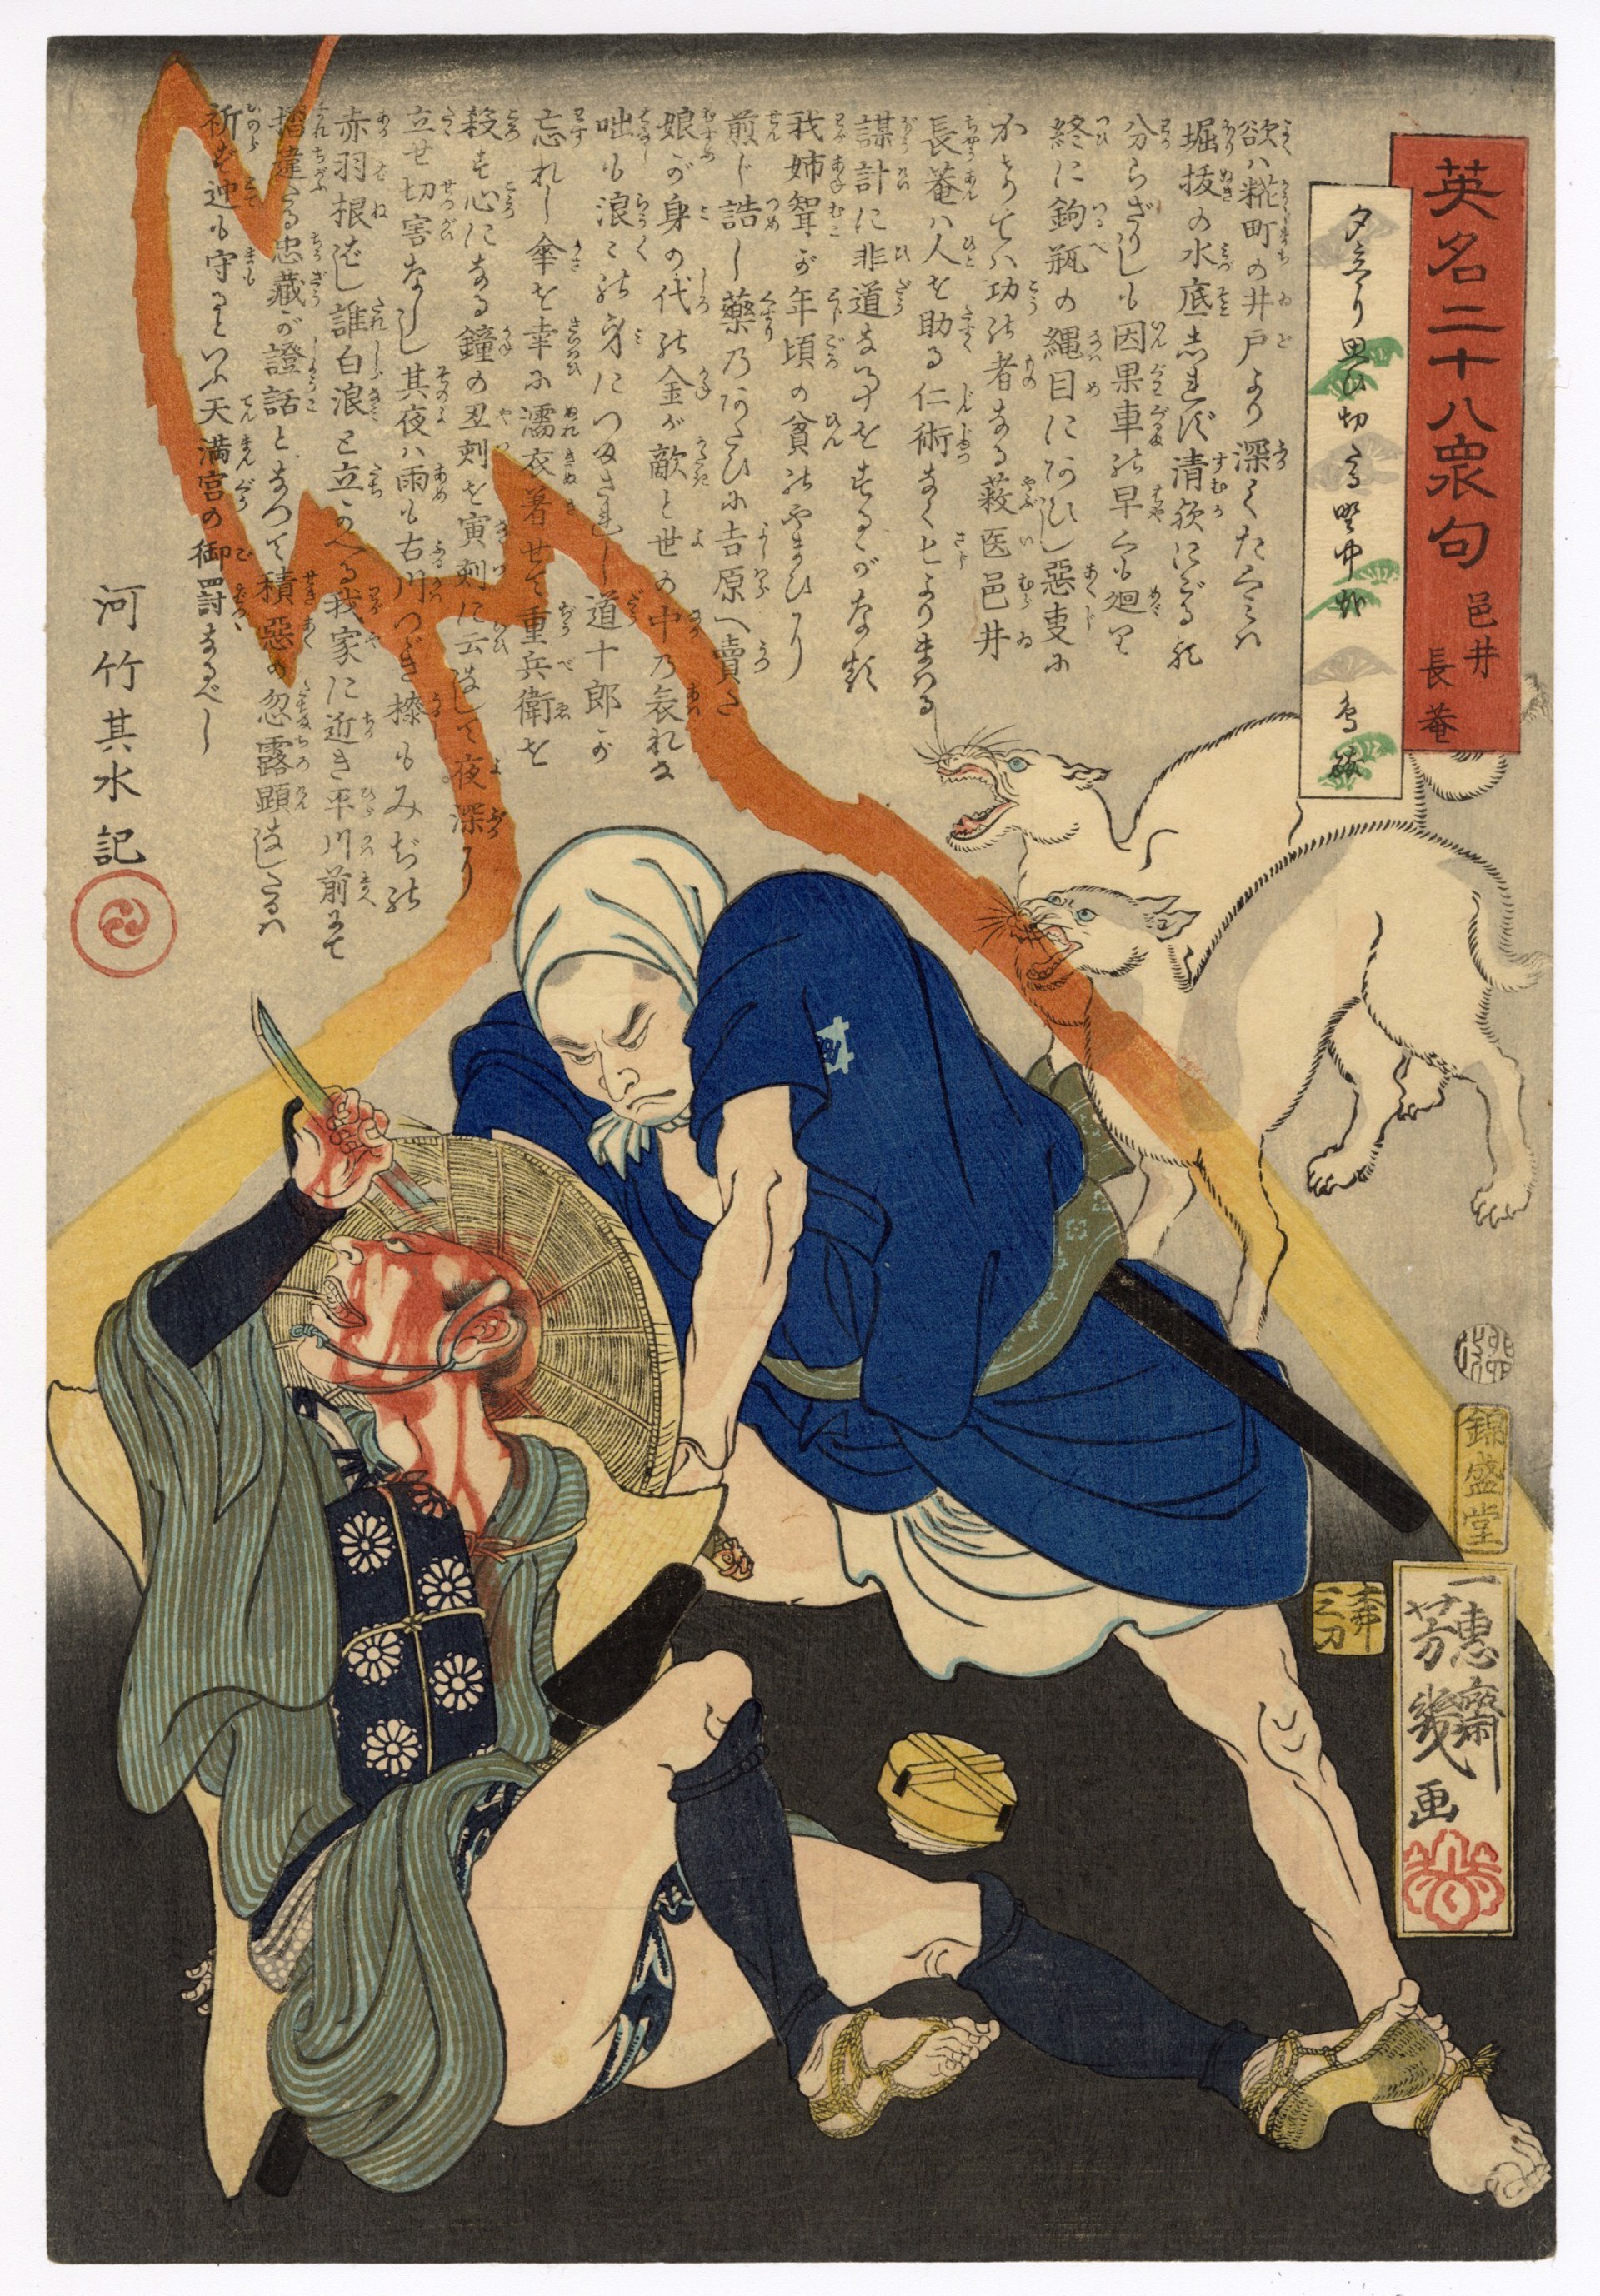 #14 Murai Choan, the Greedy Doctor, Kills his Brother In Law on a Rainy Night in the Yoshiwara by Slicing Him in Two by Yoshi-iku